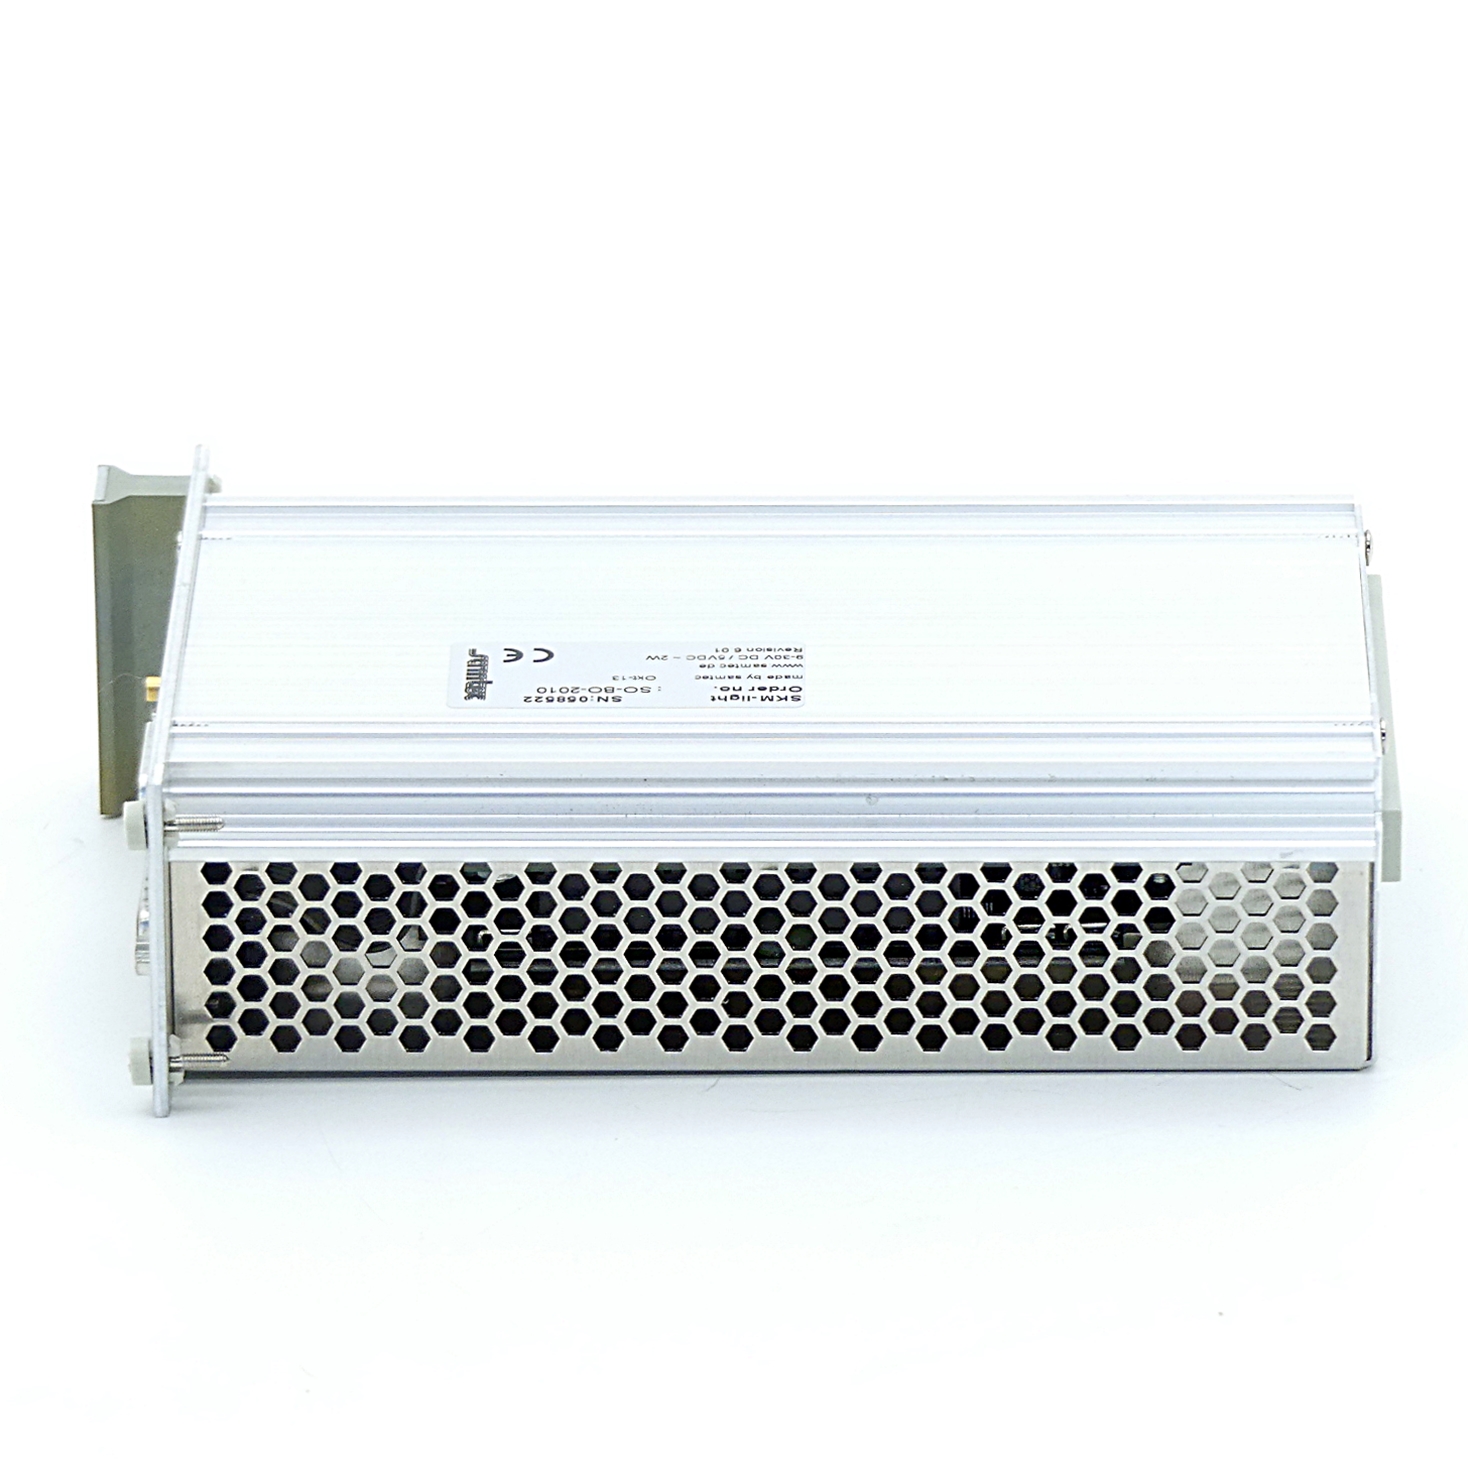 Module SKM-light USBM001 